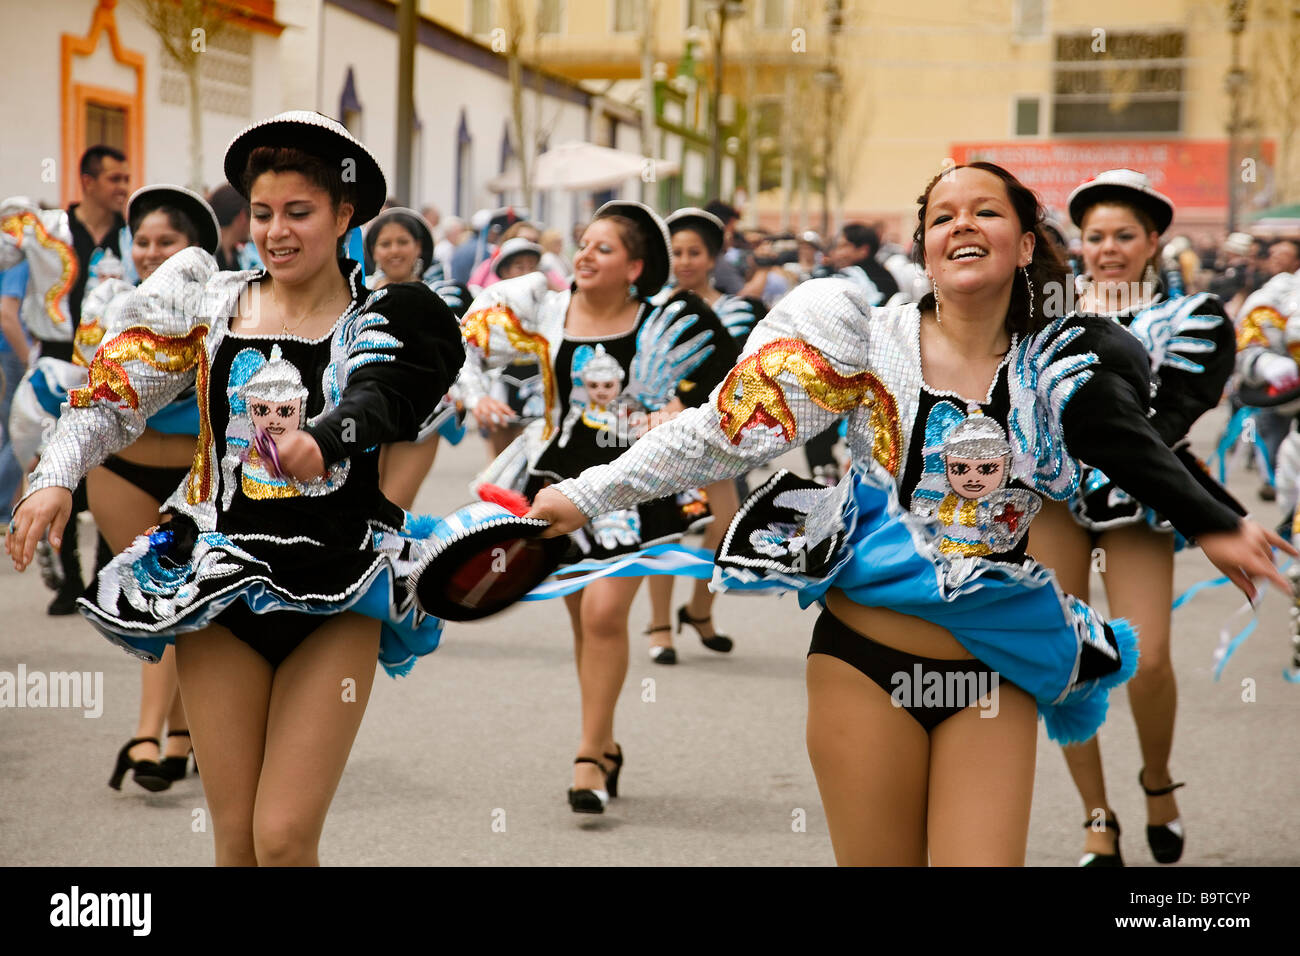 Bolivia Group Dance International Fair of the People in Fuengirola Málaga Sun Coast Andalusia Spain Stock Photo